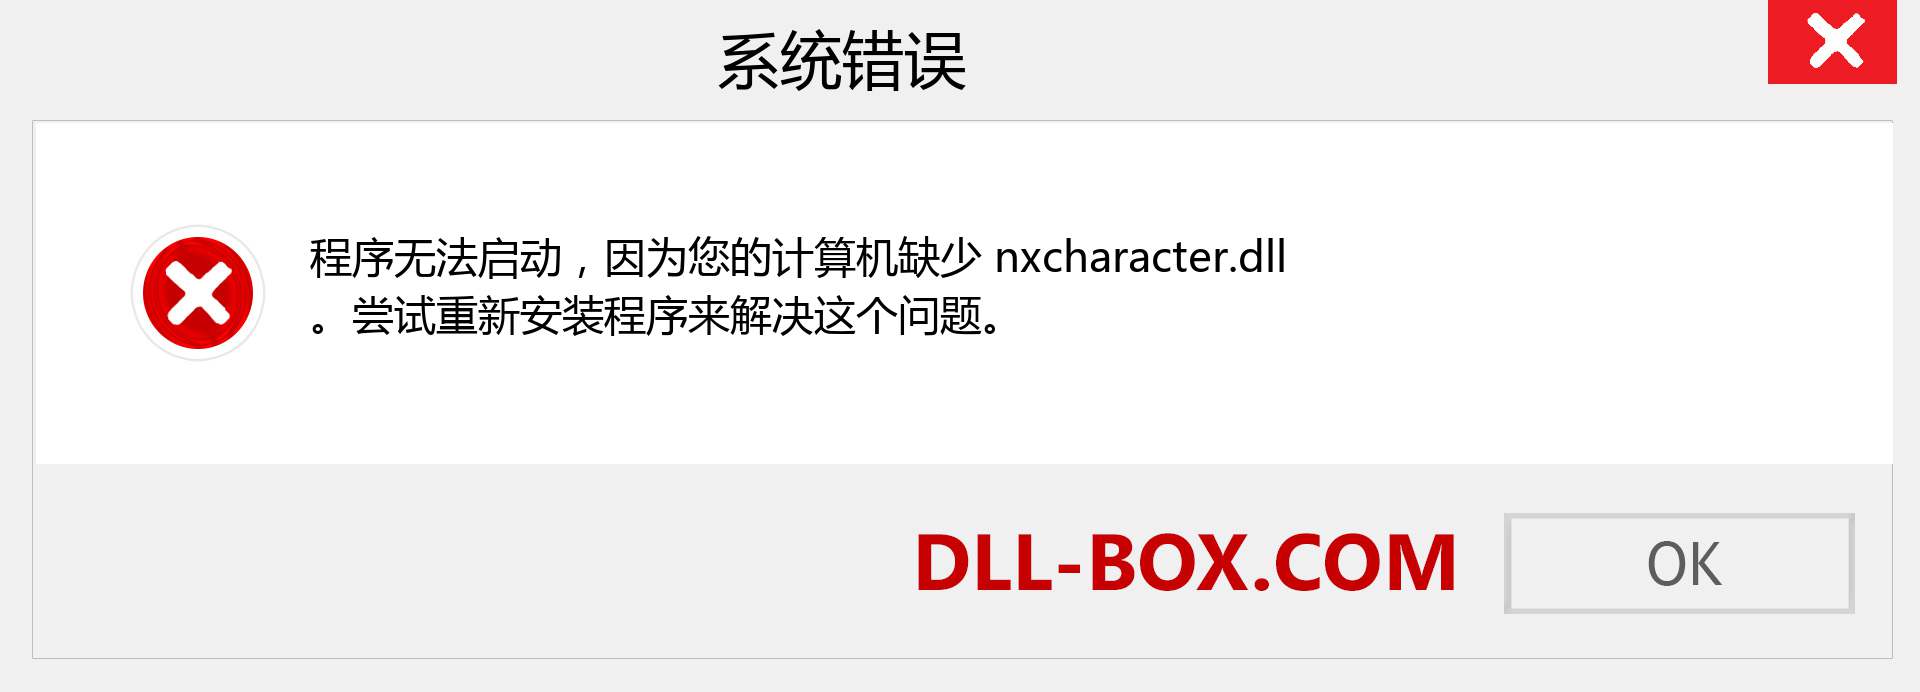 nxcharacter.dll 文件丢失？。 适用于 Windows 7、8、10 的下载 - 修复 Windows、照片、图像上的 nxcharacter dll 丢失错误